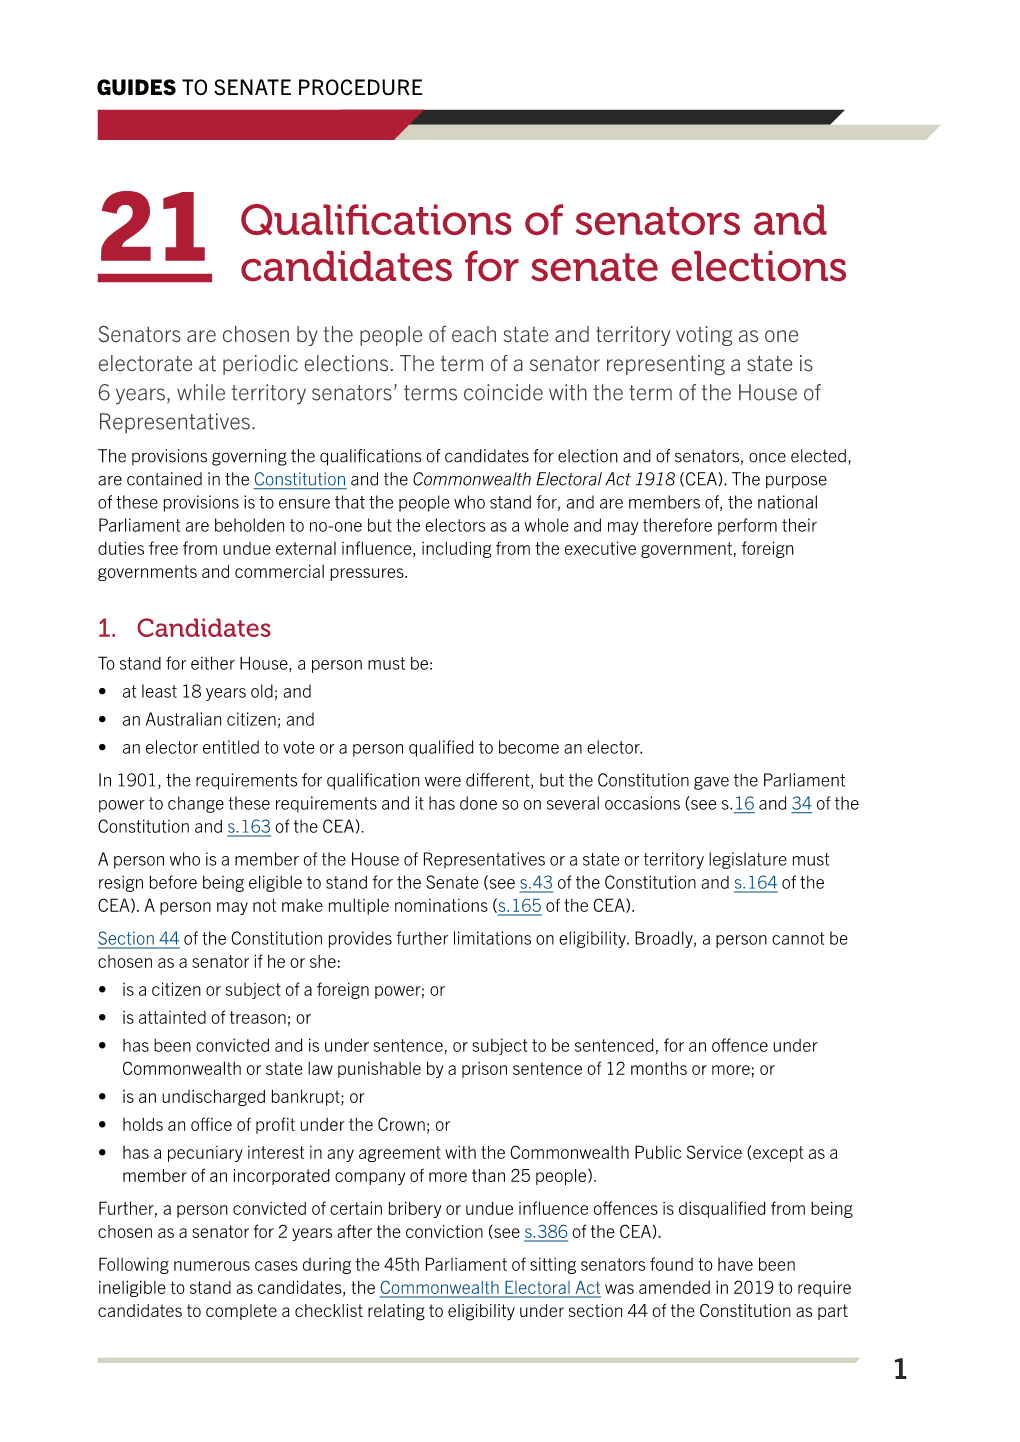 No. 21 Qualifications of Senators and Candidates for Senate Elections